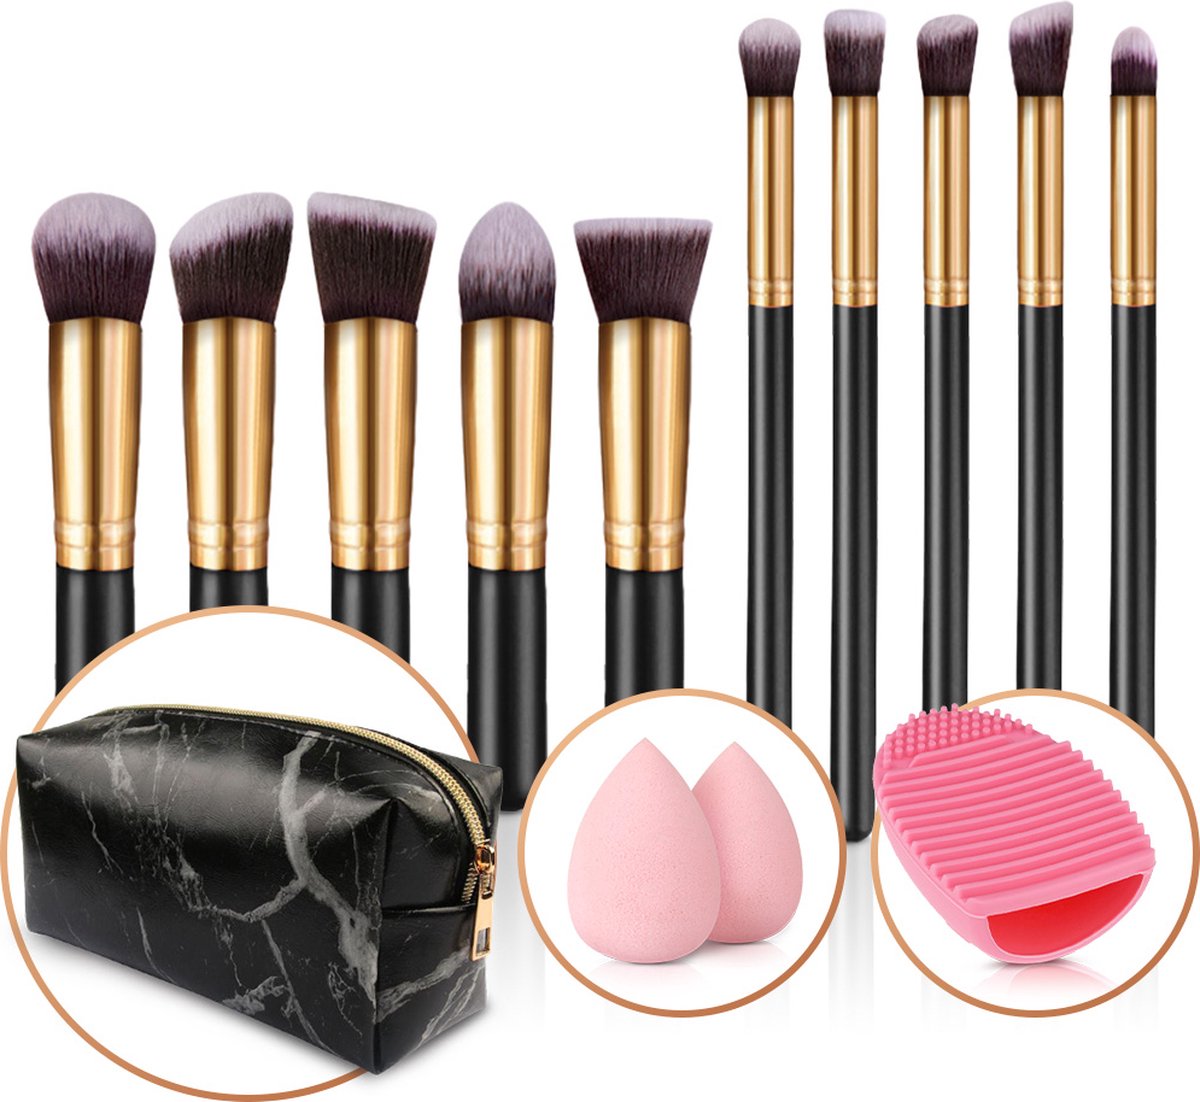 Evvie set van 10 make-up kwasten met beauty blender (2x) en brushegg in etui - zwart/goud